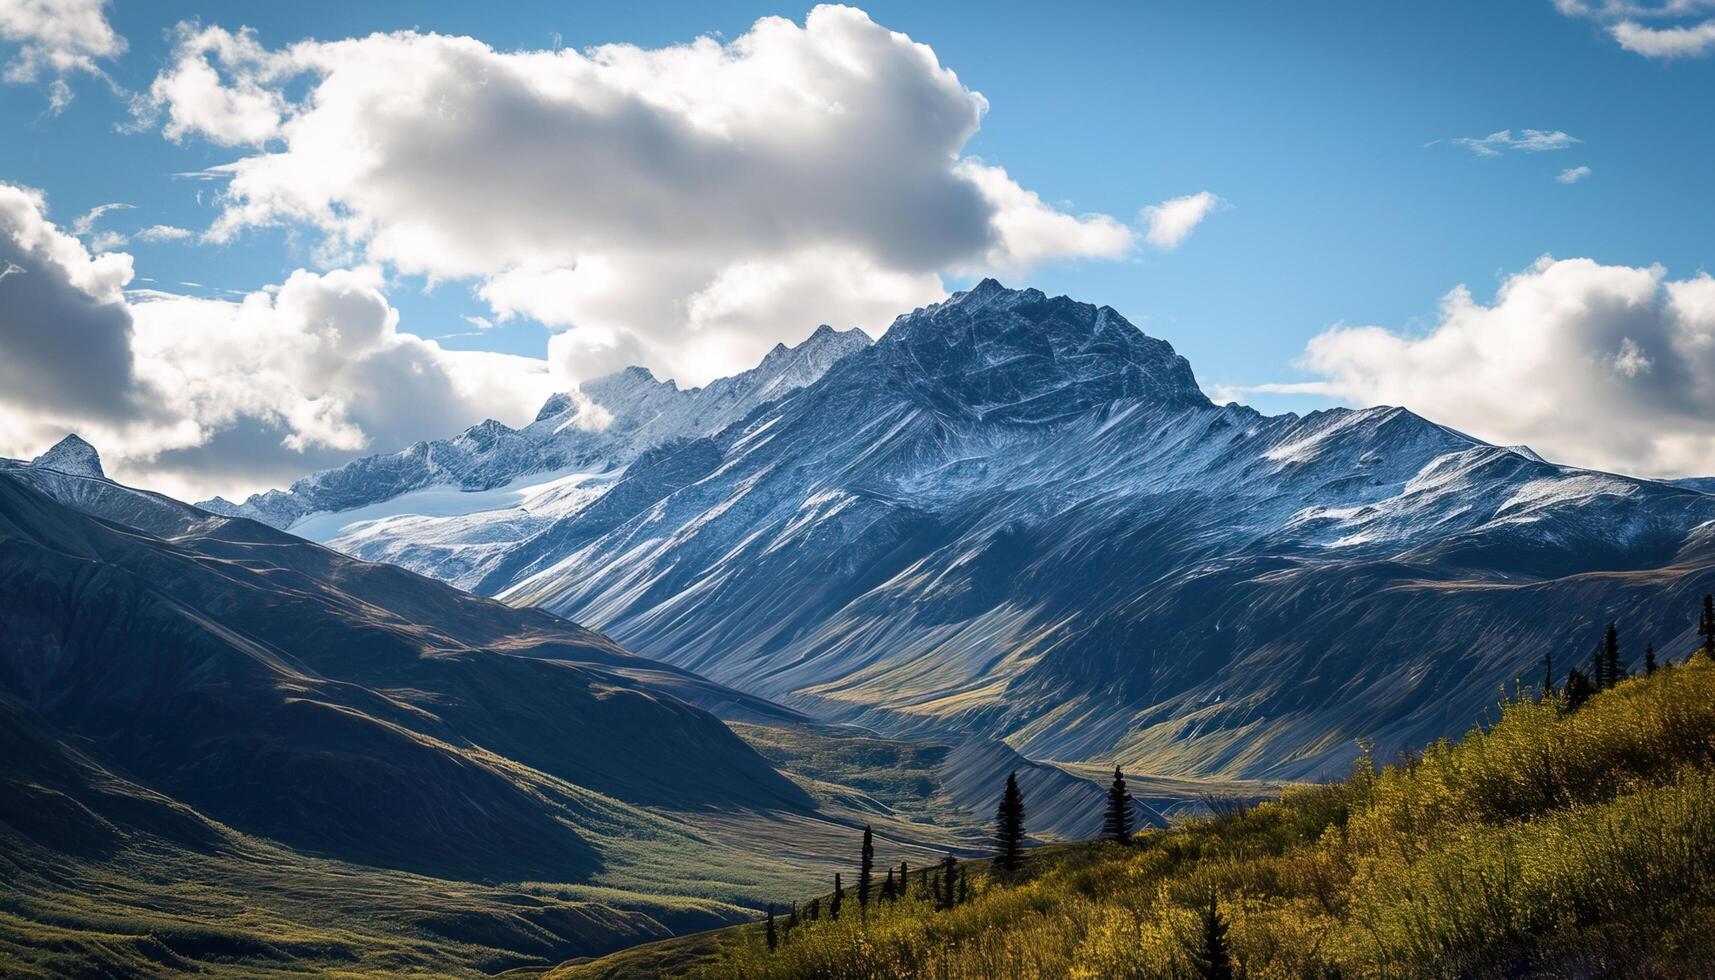 ai generado Nevado montañas de Alaska, paisaje con bosques, valles, y ríos en tiempo de día. asombroso naturaleza composición antecedentes fondo de pantalla, viaje destino, aventuras al aire libre foto